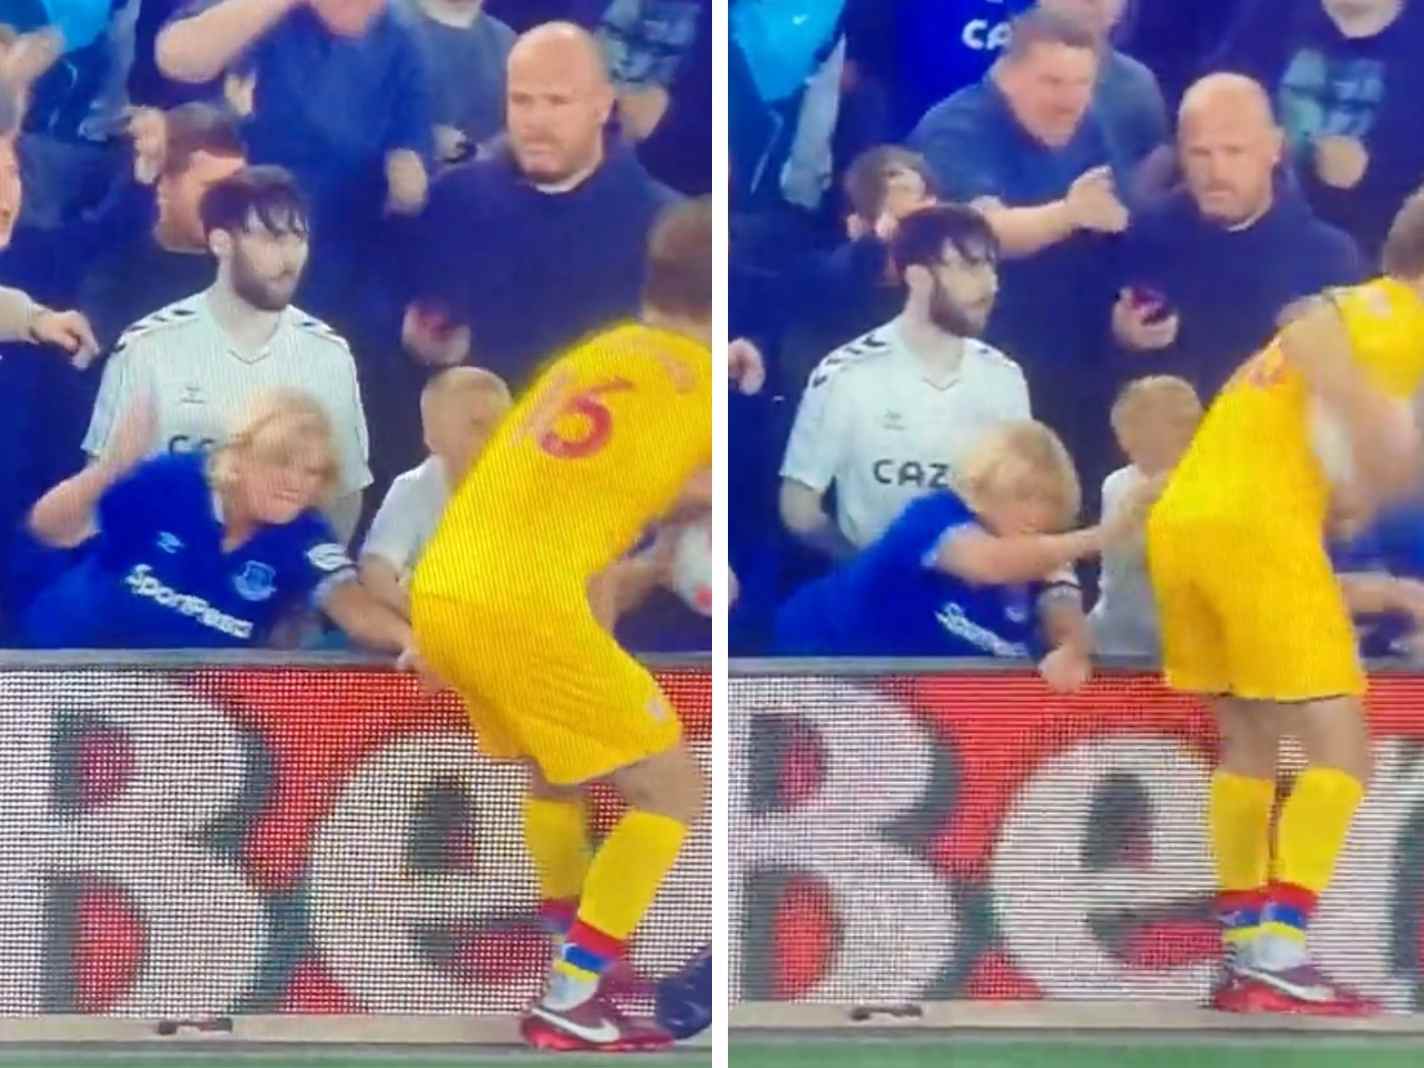 The photo shows an elderly Everton fan trying to hit Joachim Andersen.